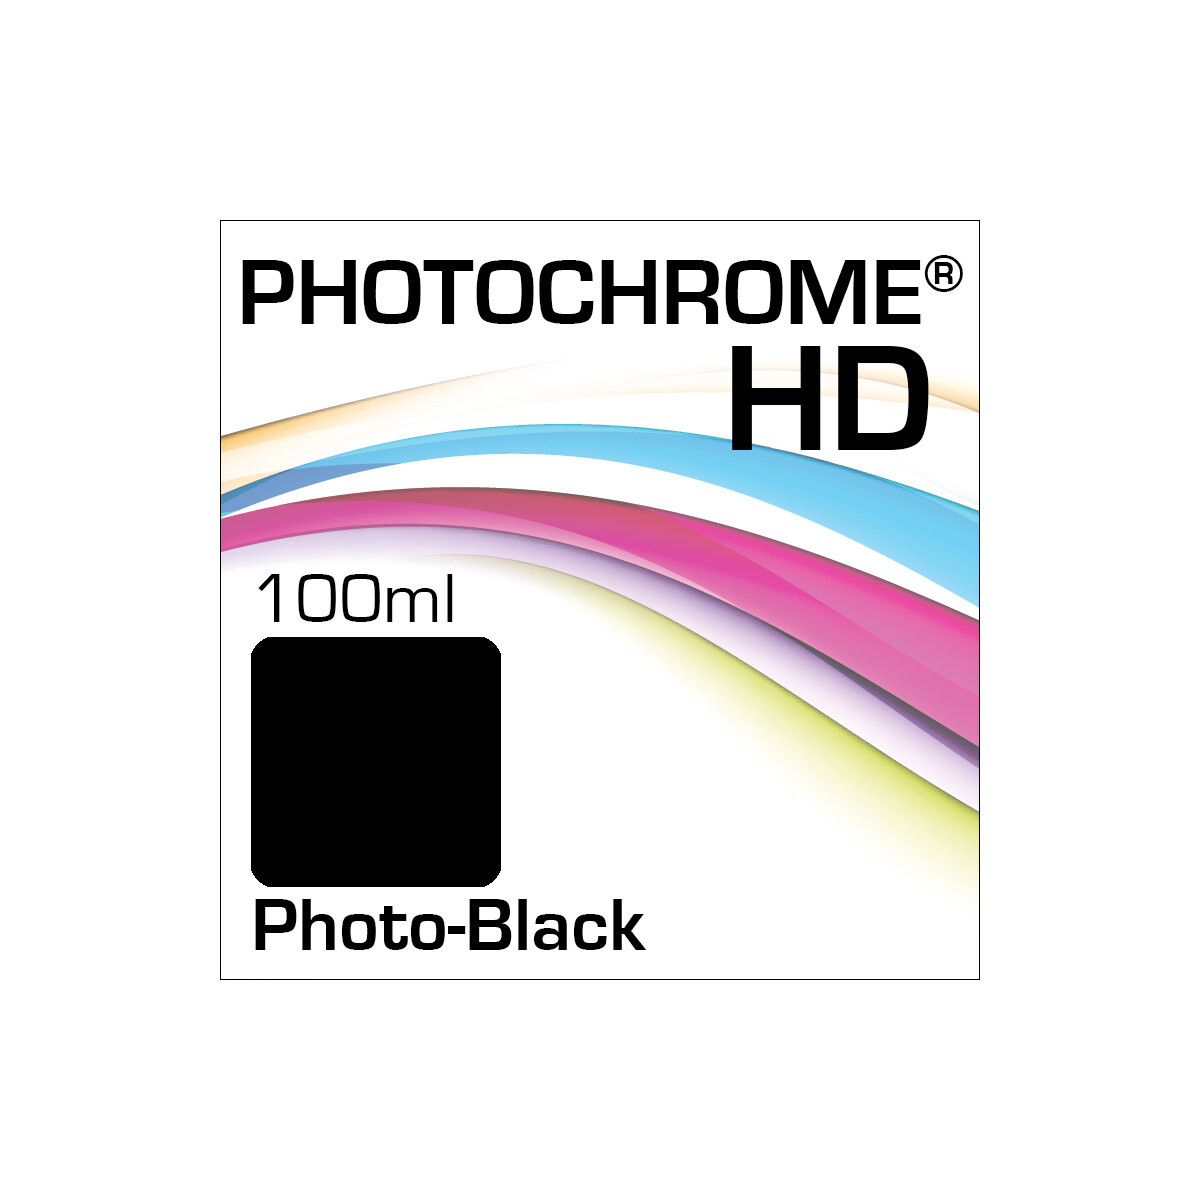 Lyson Photochrome HD Bottle Photo-Black 100ml (EOL)